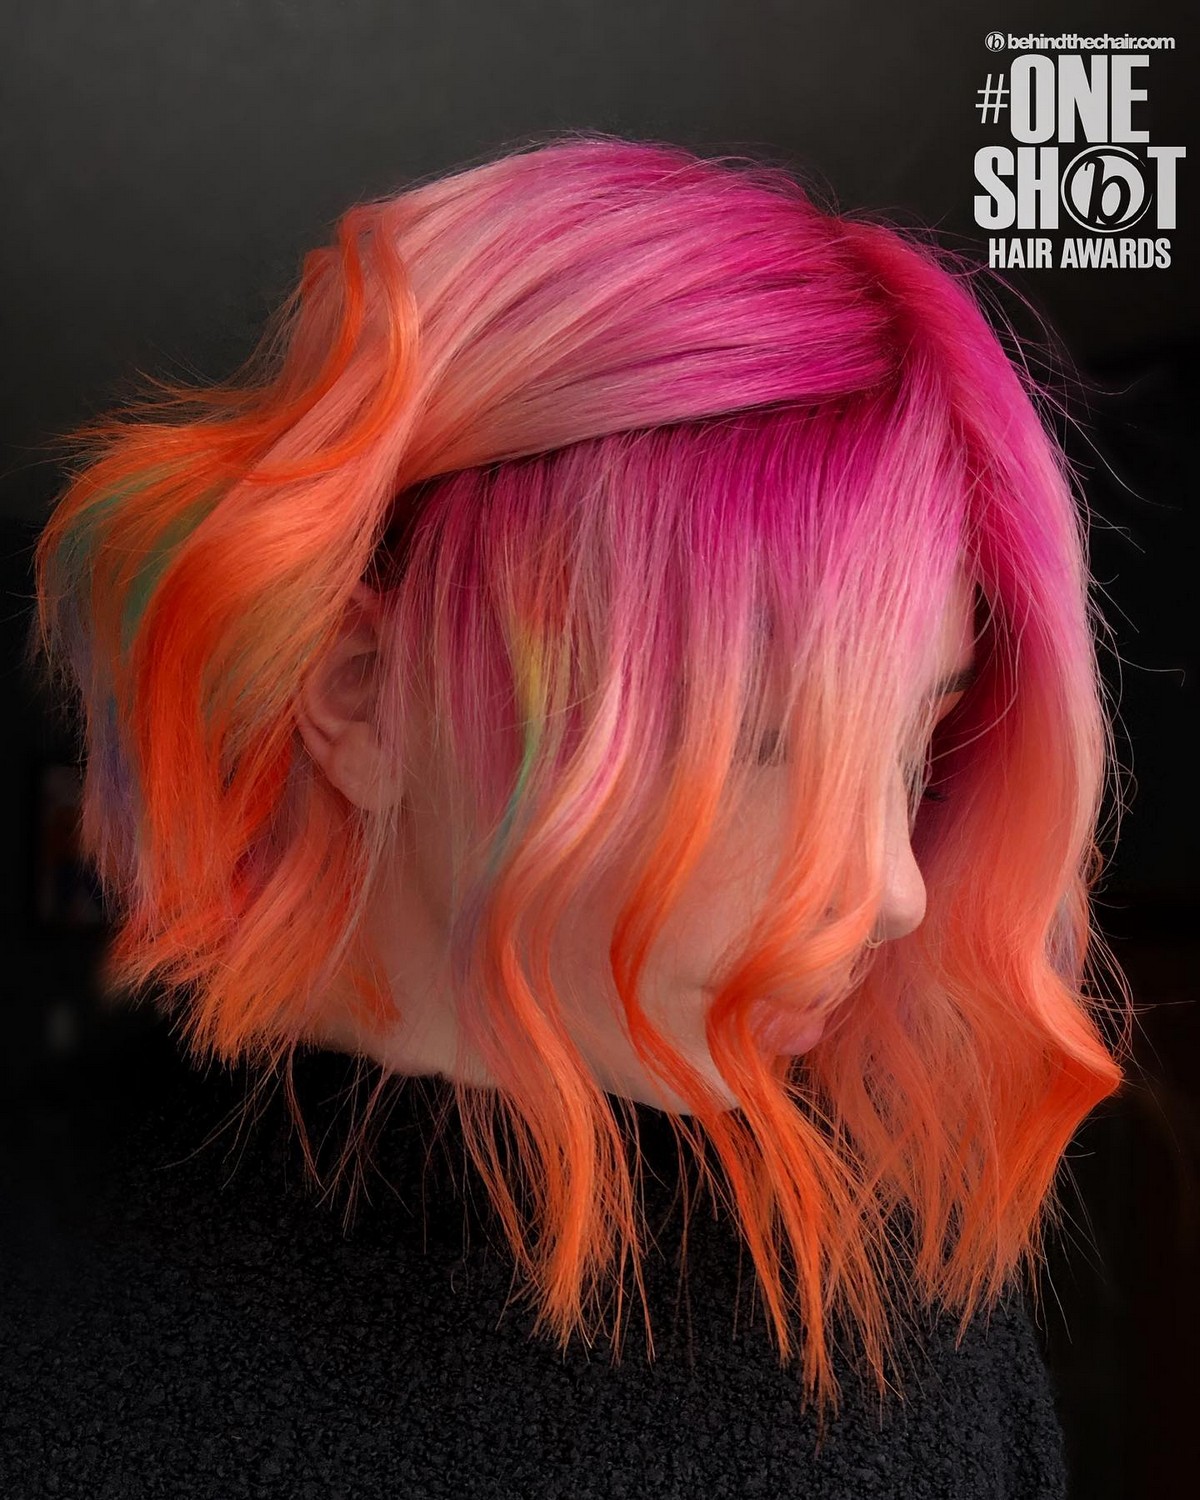 Pink and Orange Hair